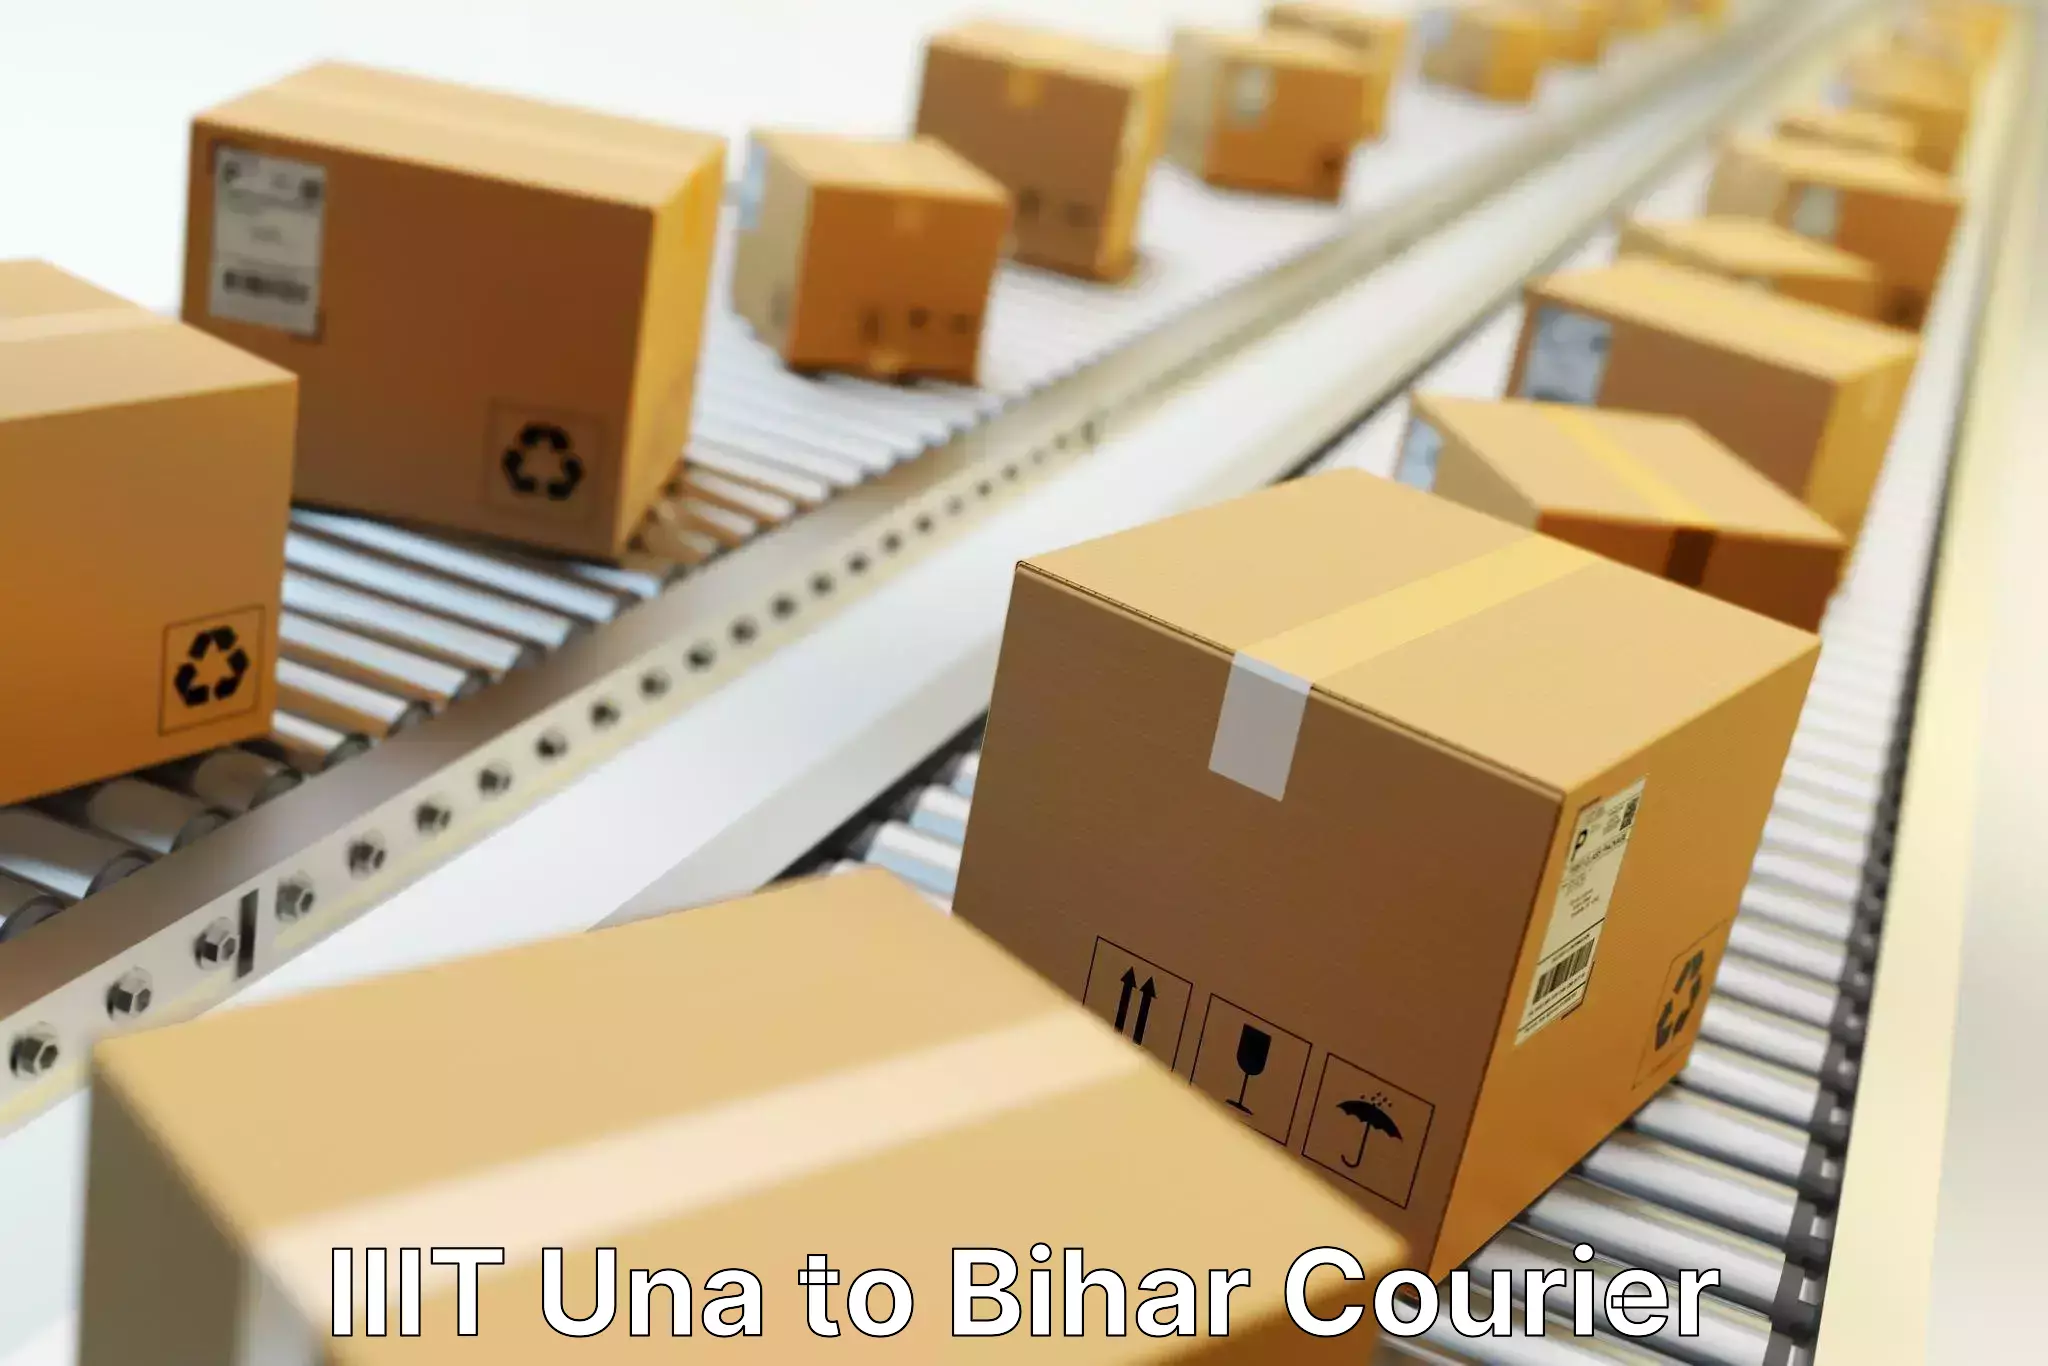 Flexible delivery scheduling IIIT Una to Bhojpur